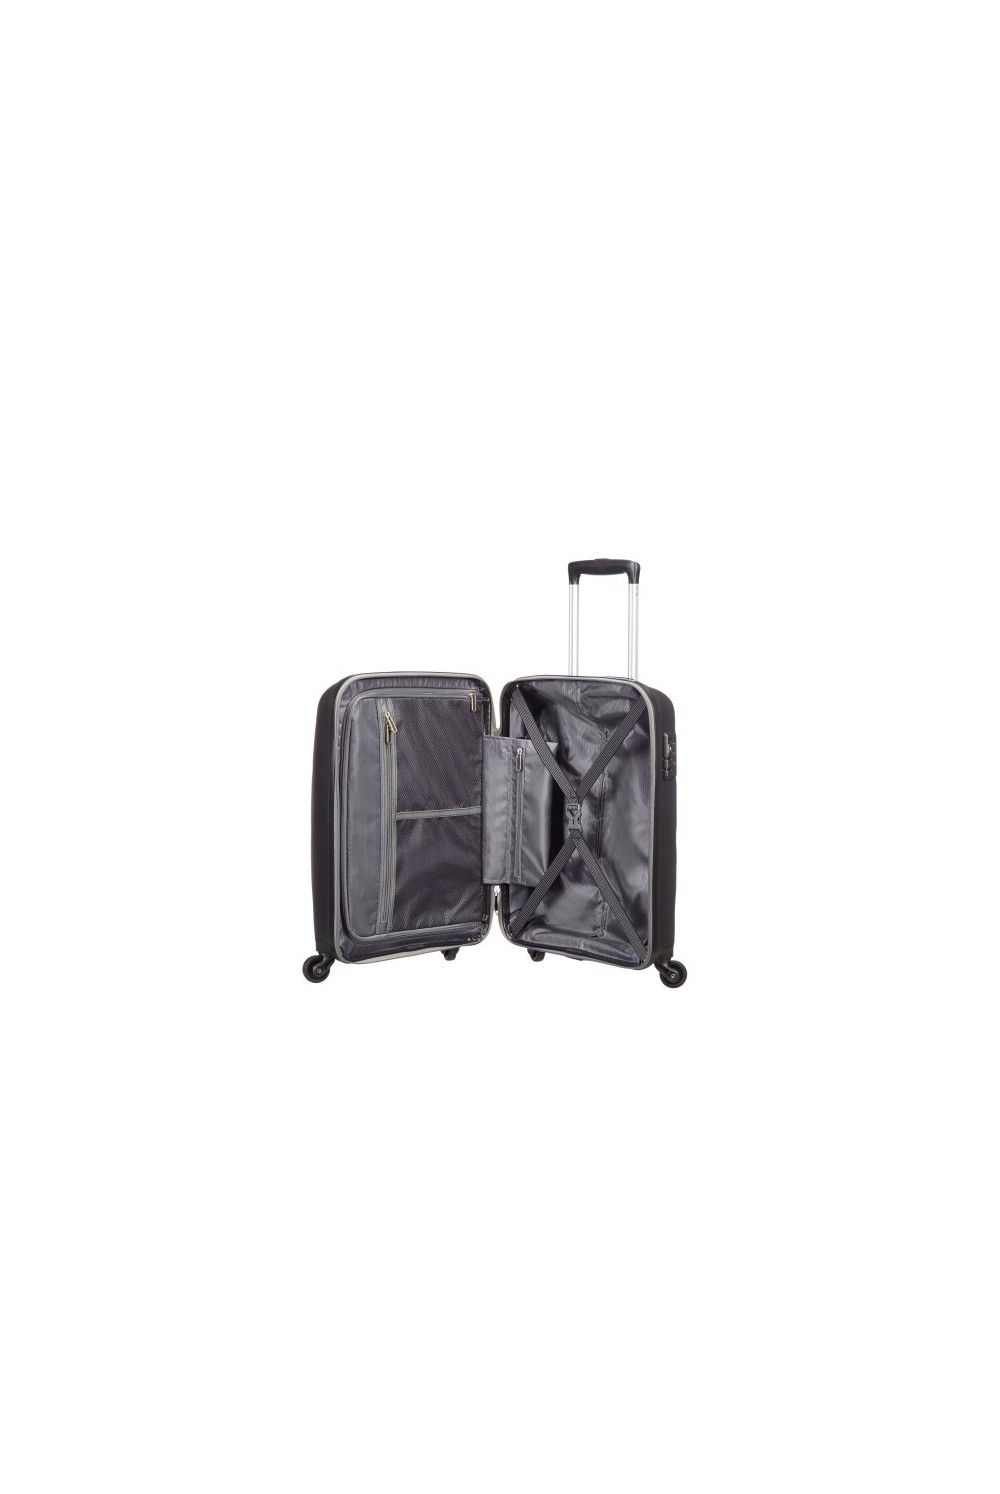 American Tourister Bon Air 55 4 wheel hand luggage